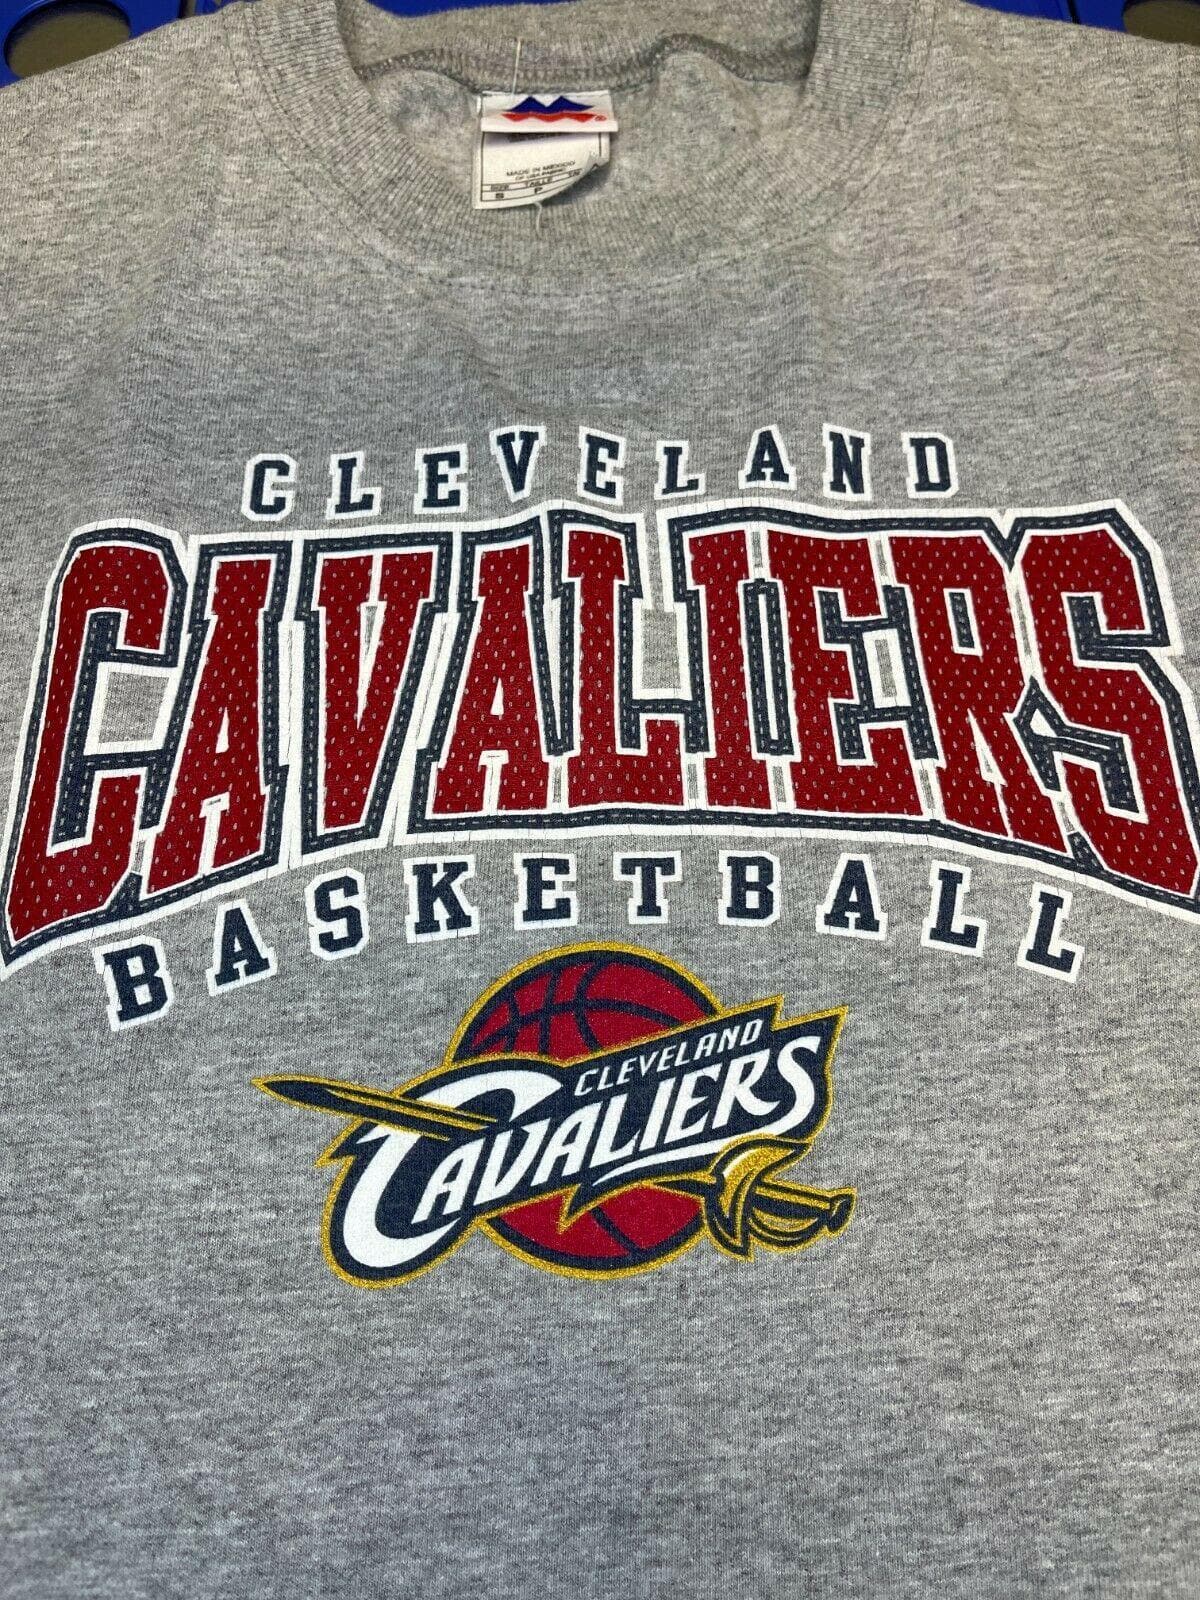 NBA Cleveland Cavaiers Majestic Sleeveless Vest T-Shirt Youth Small 6-8